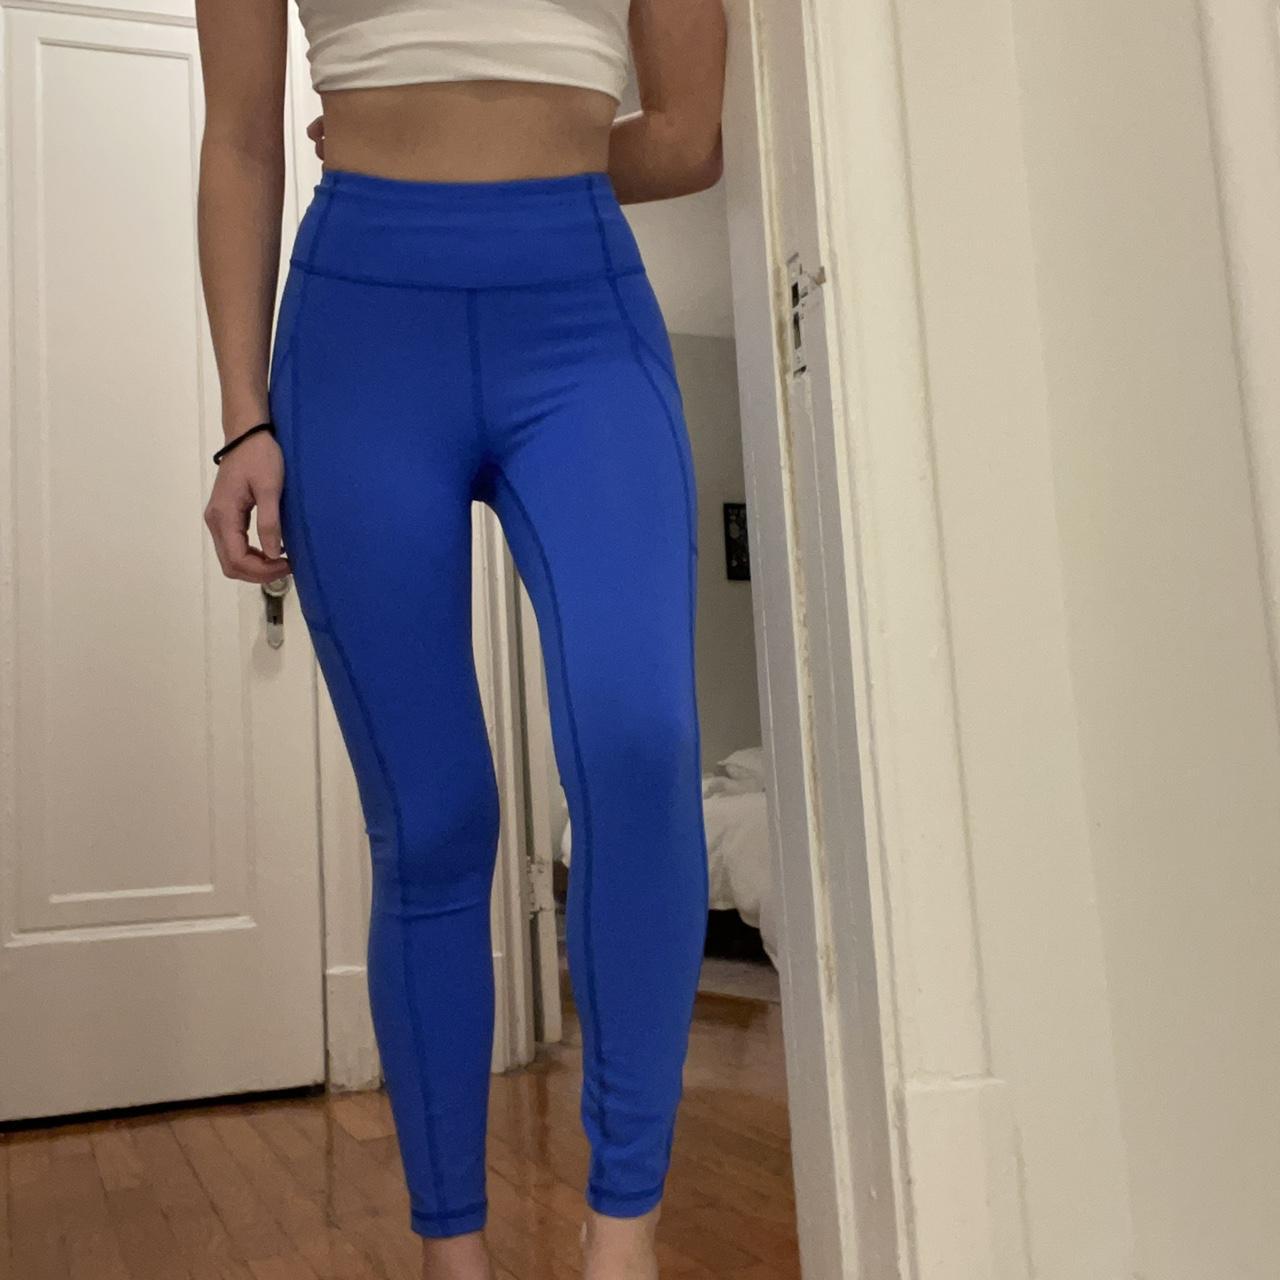 Lululemon Invigorate High-Rise Tight leggings 25 in - Depop